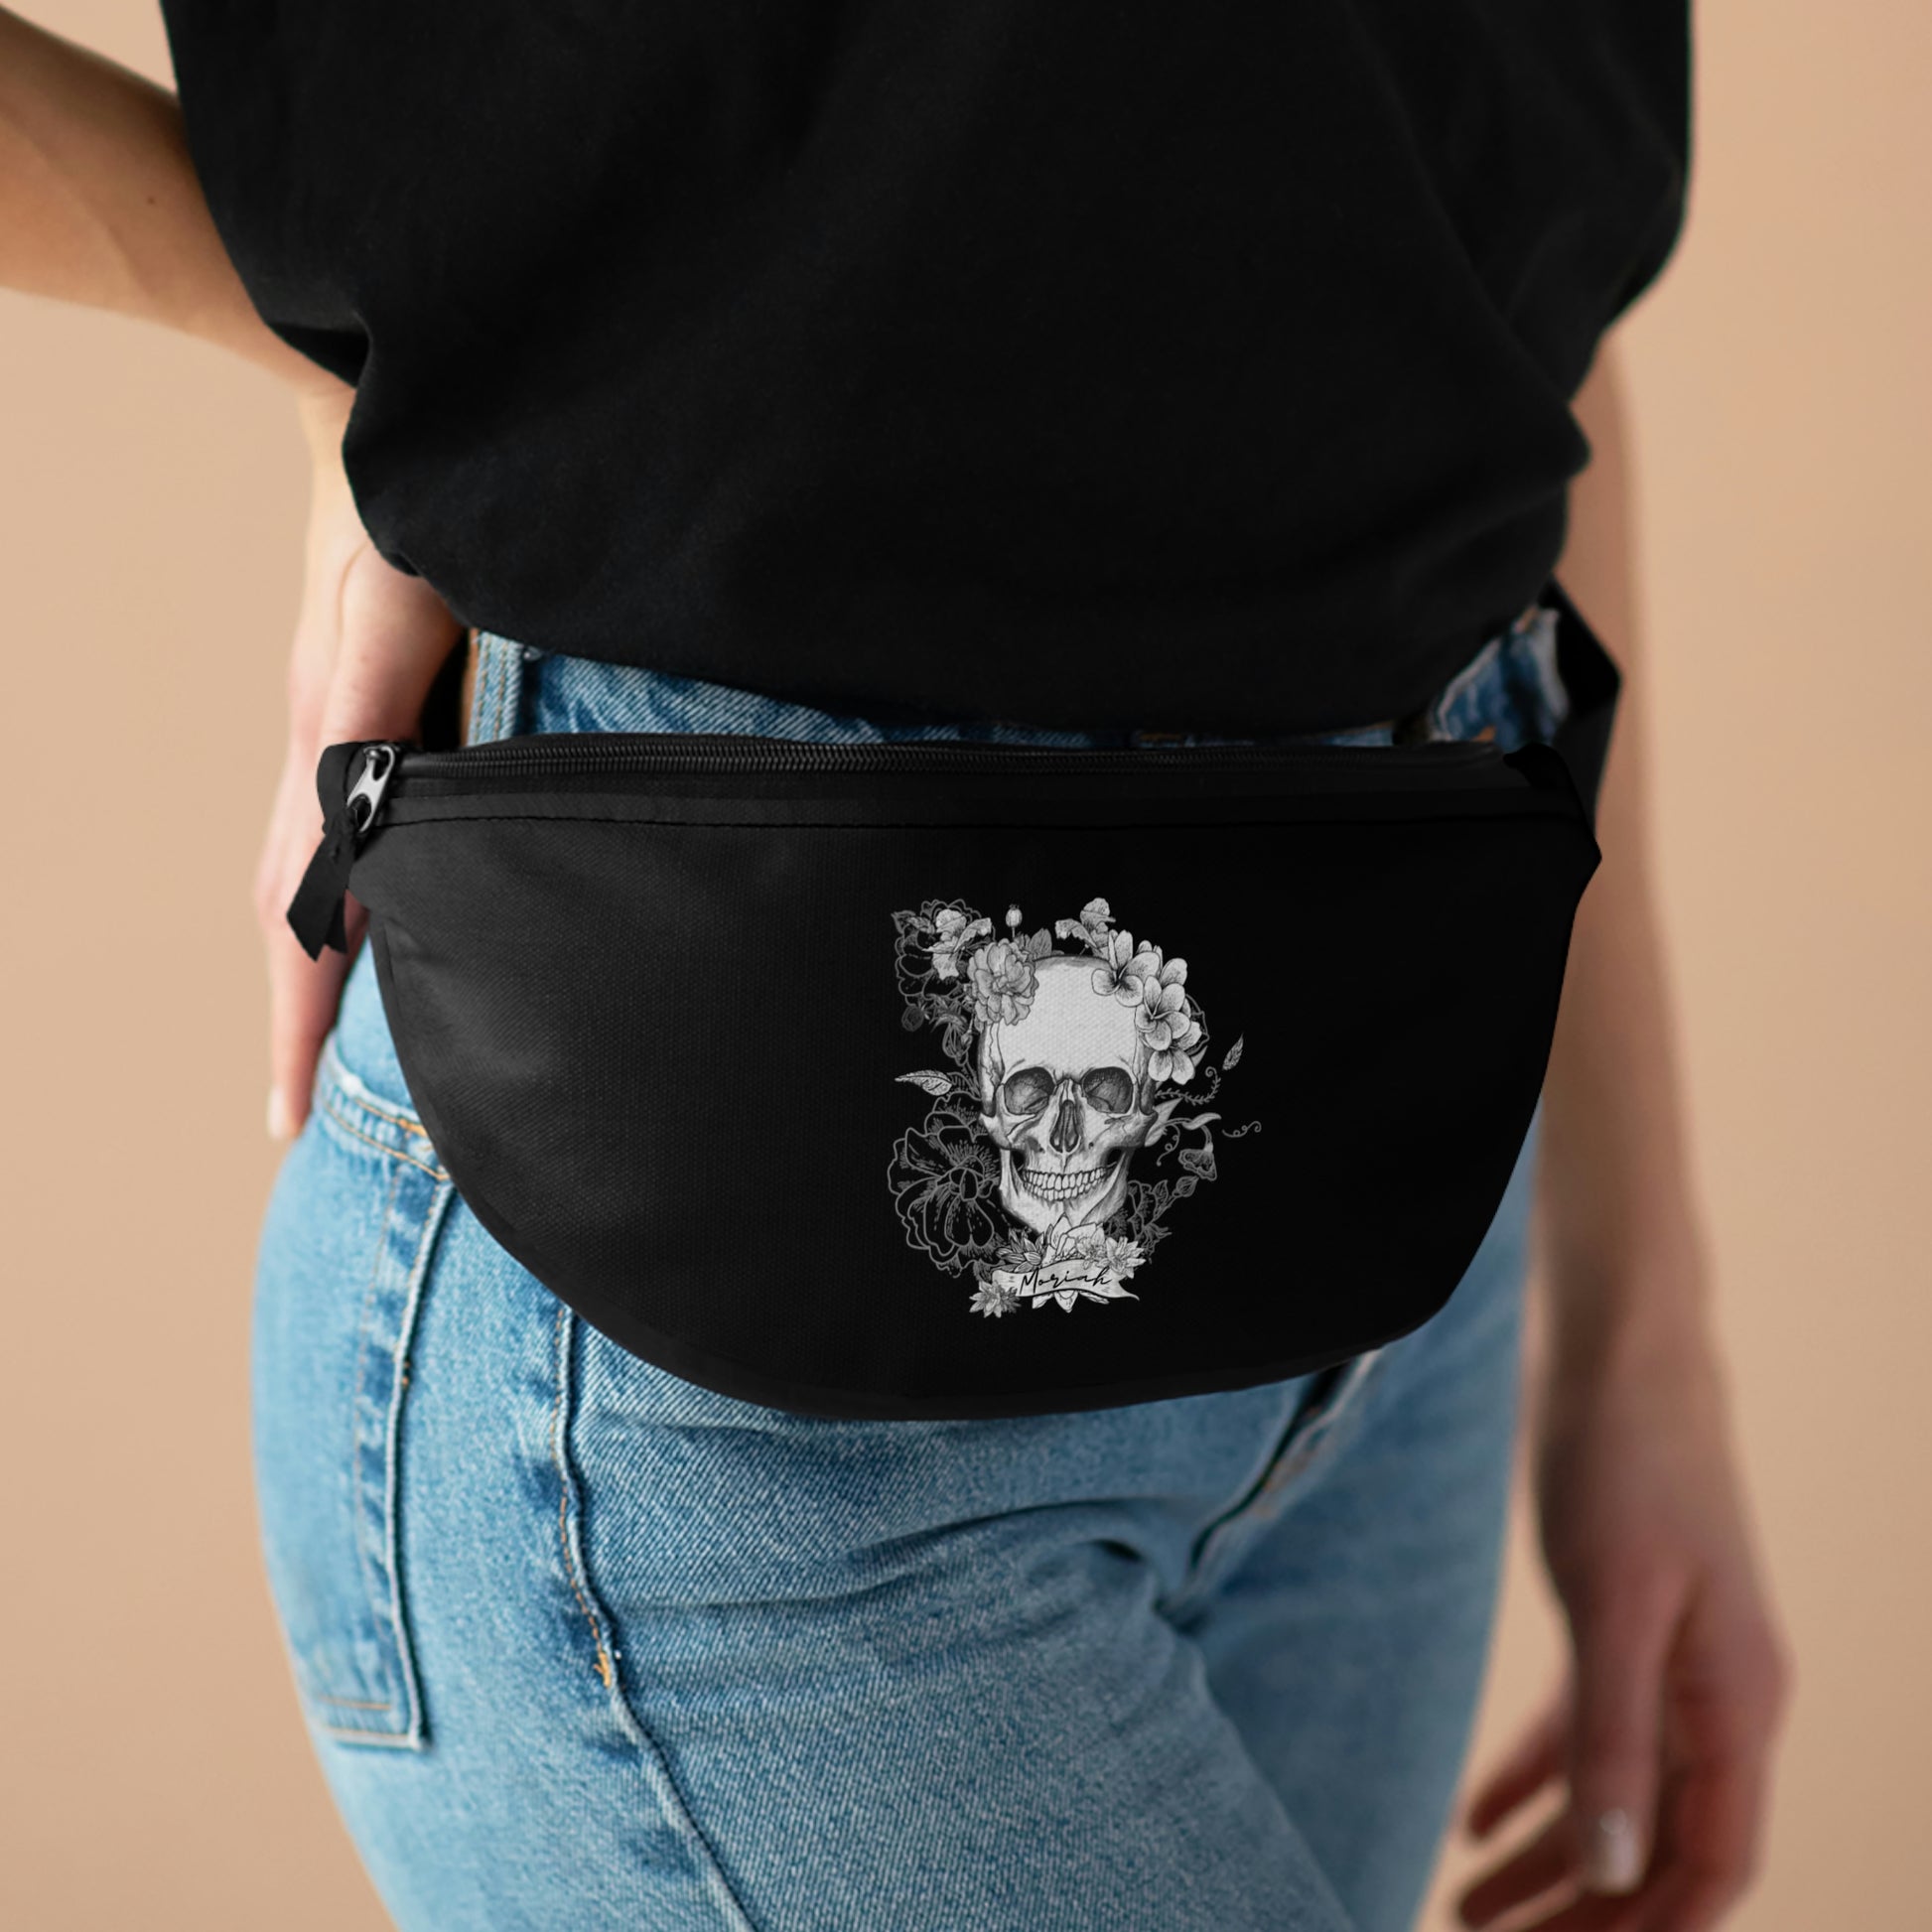 Black Leather Bum Bag for Women. Custom Fanny Pack 